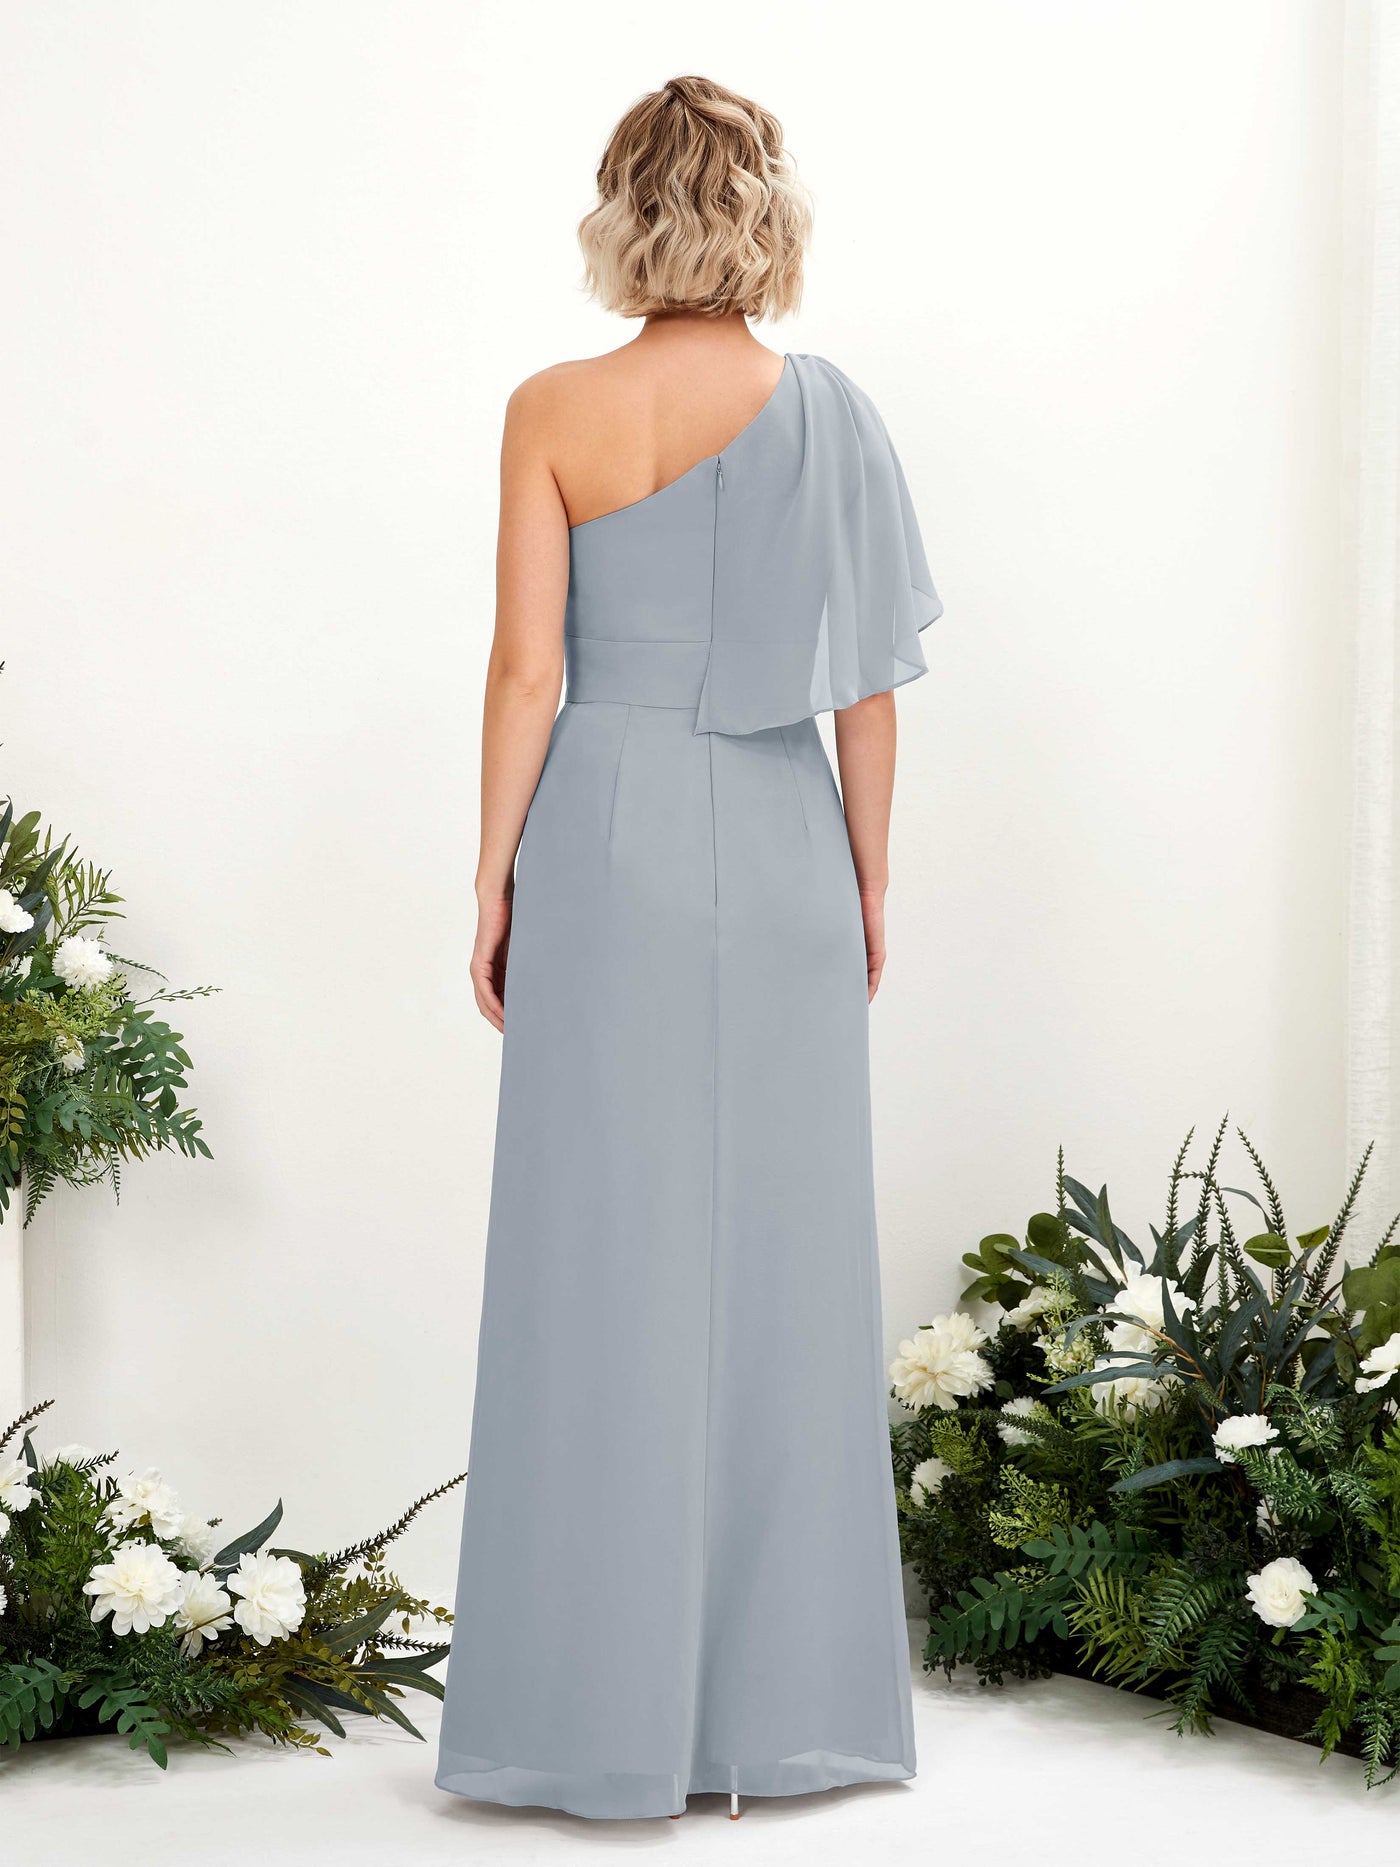 Dusty Blue-Upgrade Bridesmaid Dresses Bridesmaid Dress Ball Gown Chiffon Full Length Short Sleeves Wedding Party Dress (81223704)#color_dusty-blue-upgrade